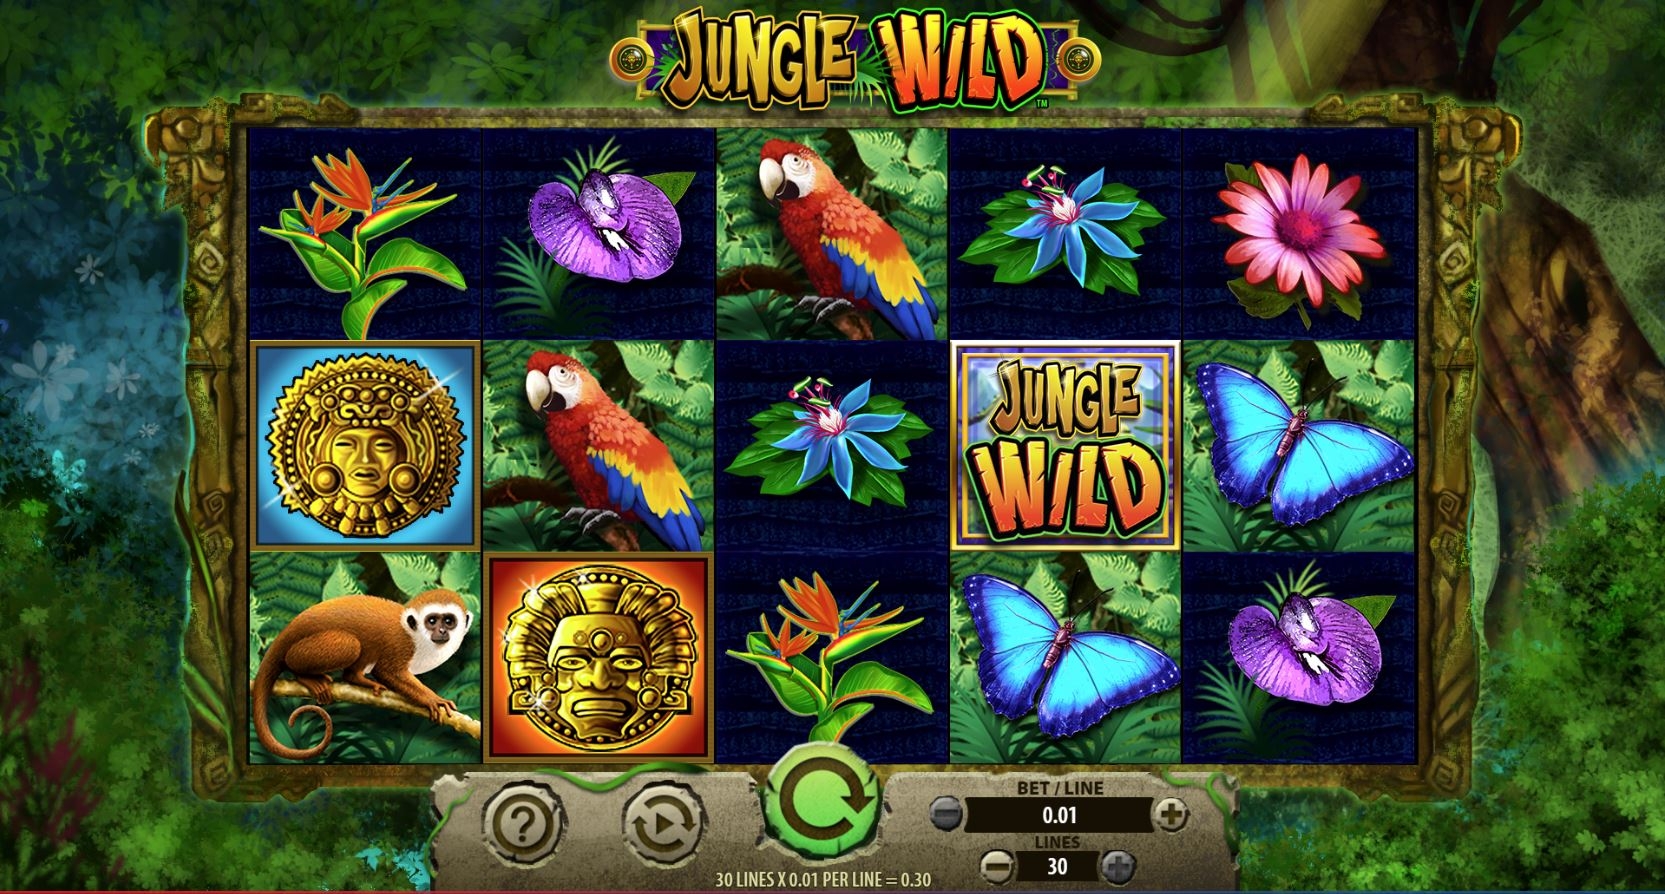 Jungle Wild slot machine